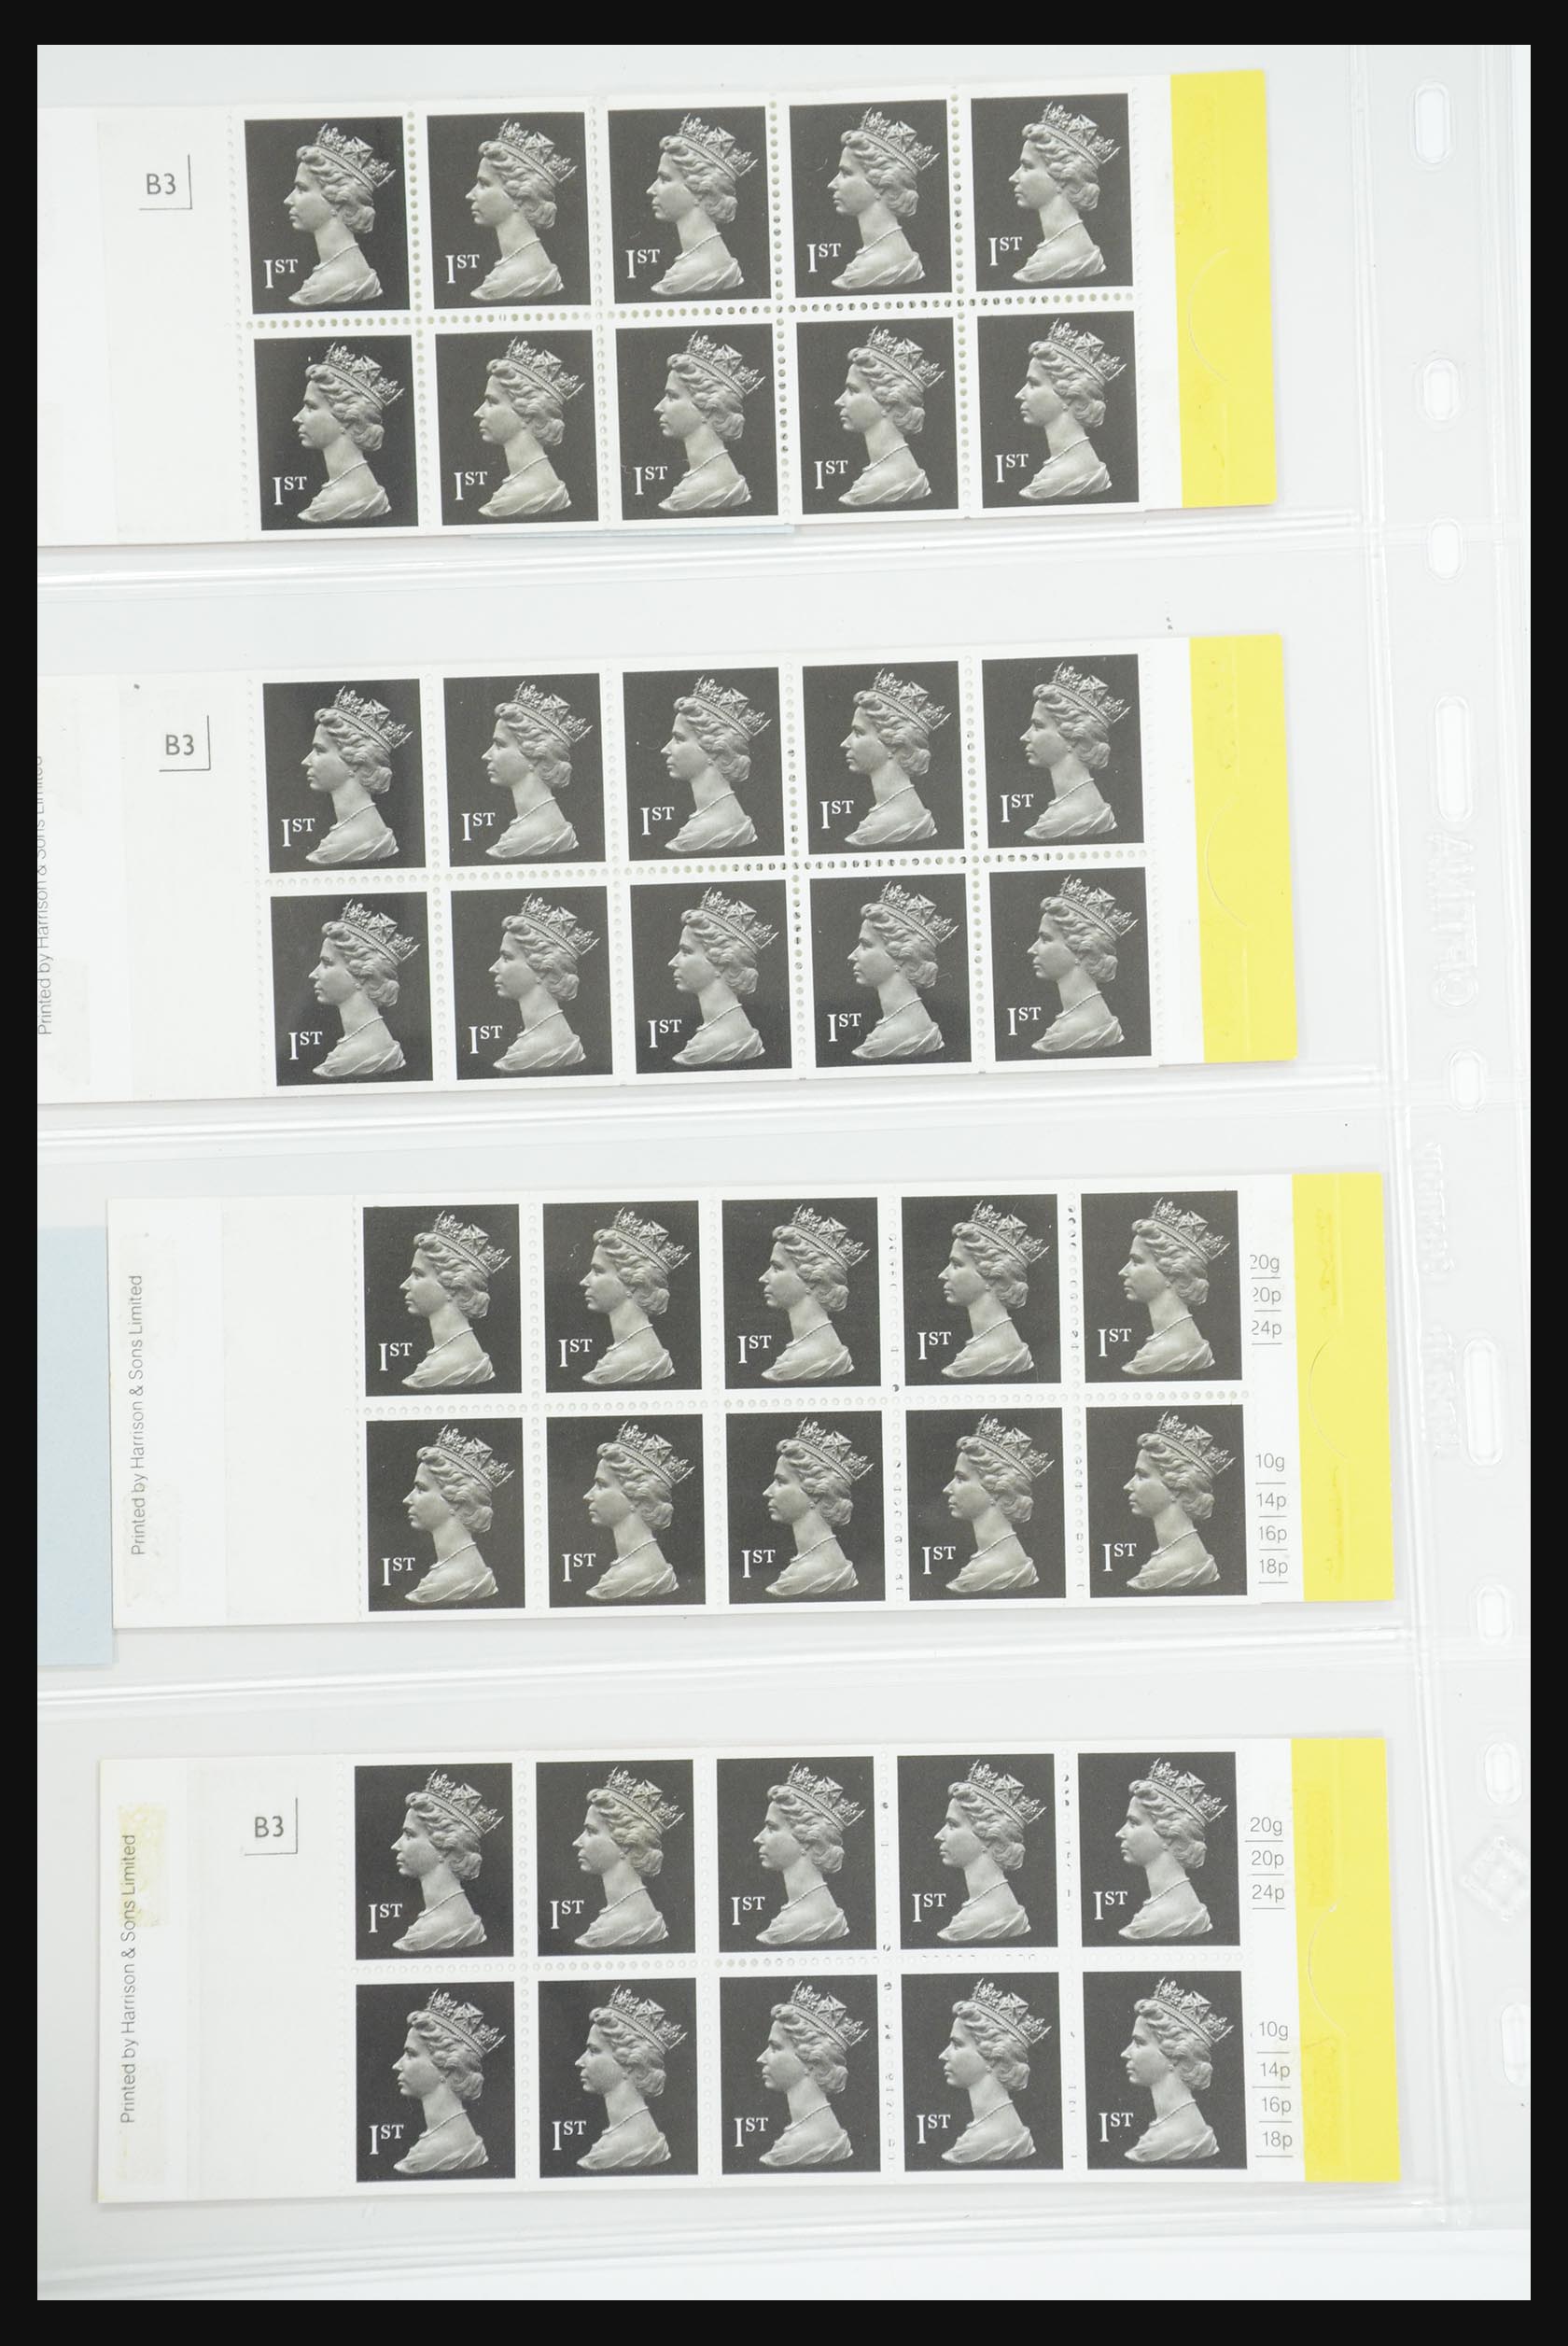 31960 094 - 31960 Great Britain stampbooklets 1989-2000.